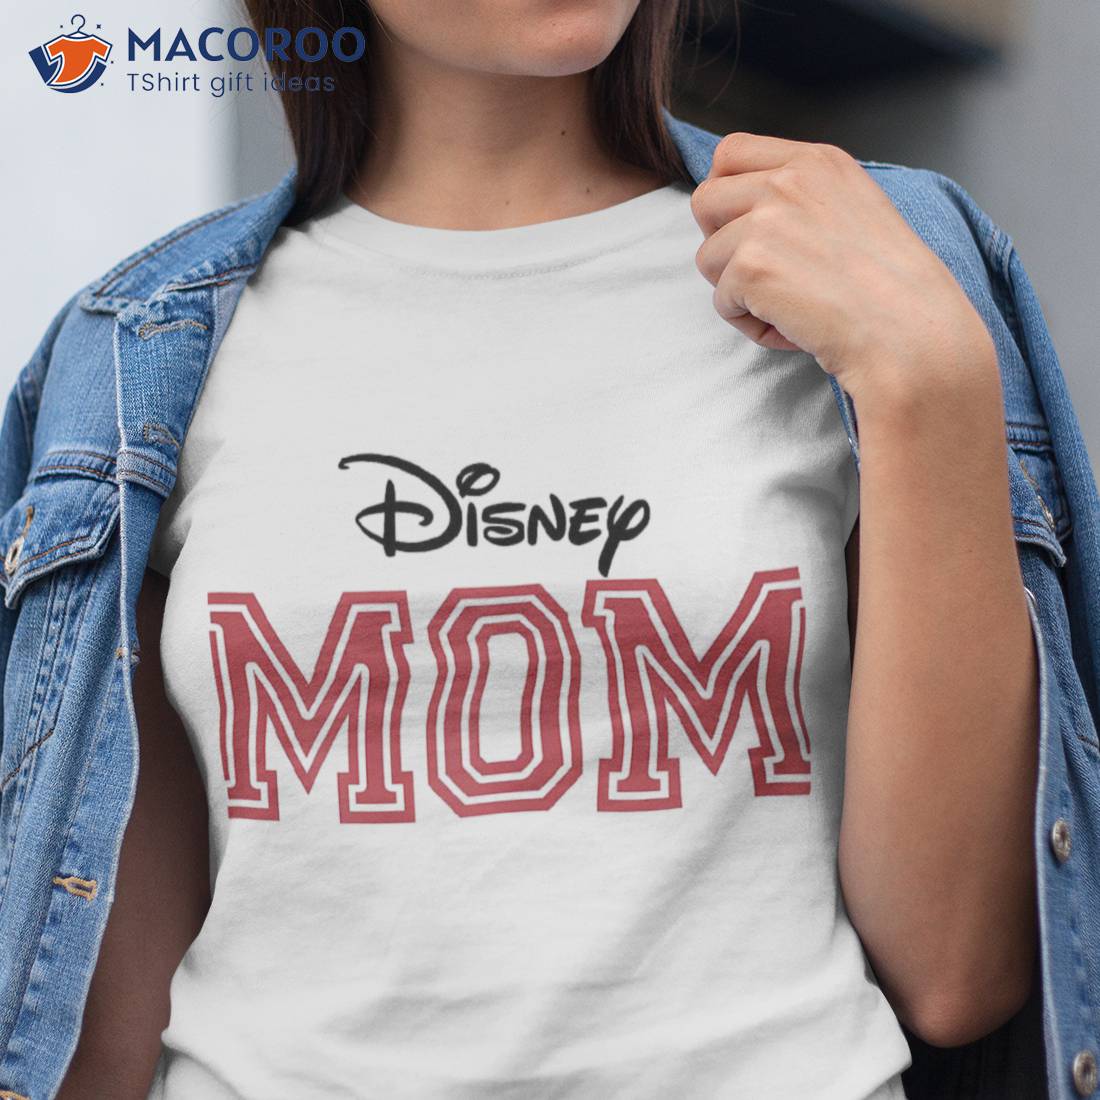 Disney Mickey Mom Shirt, Good Birthday Presents For Mom